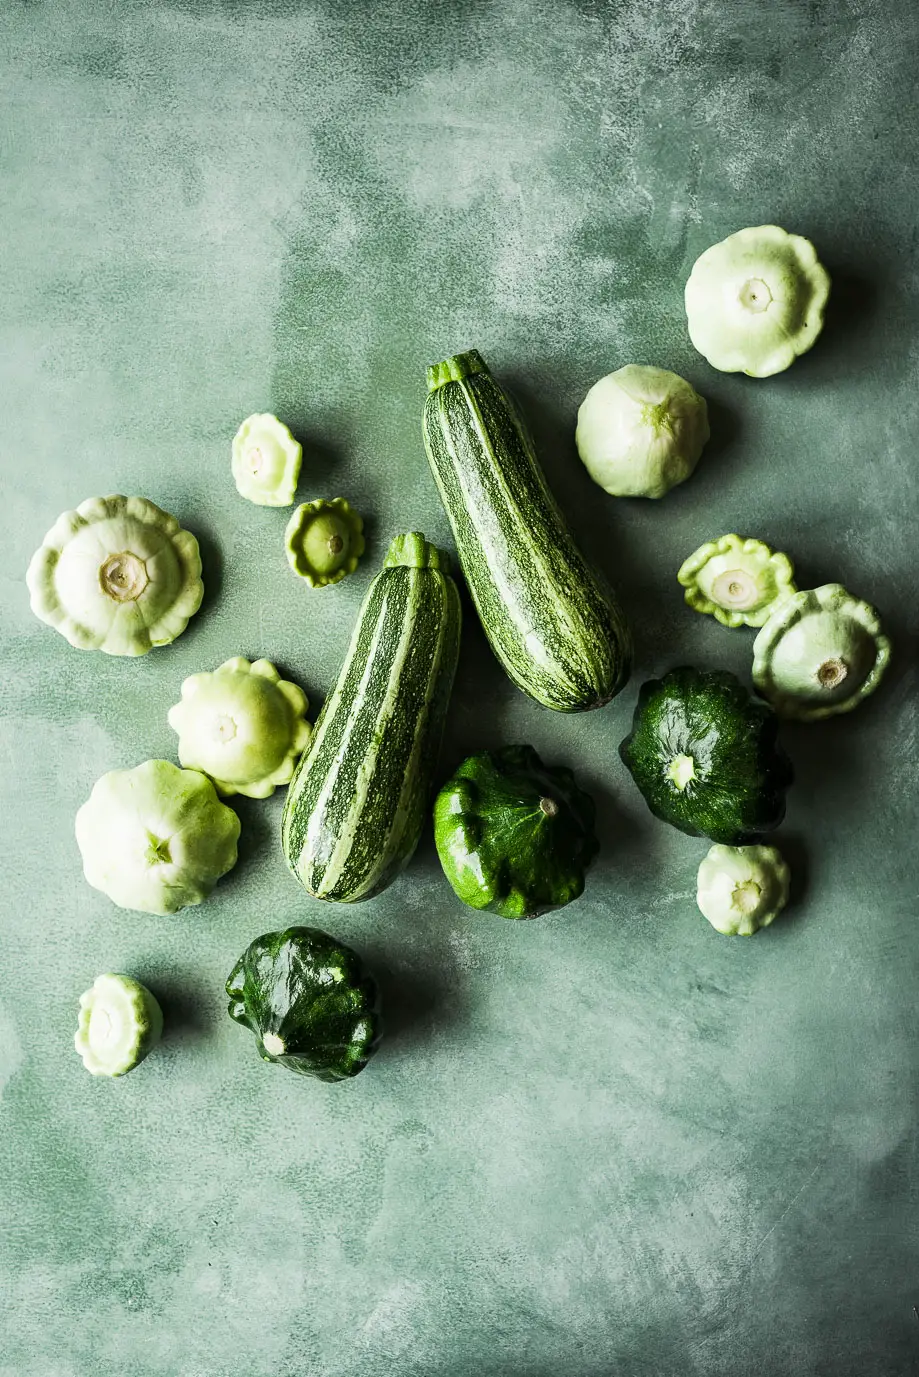 zucchini & squash on green